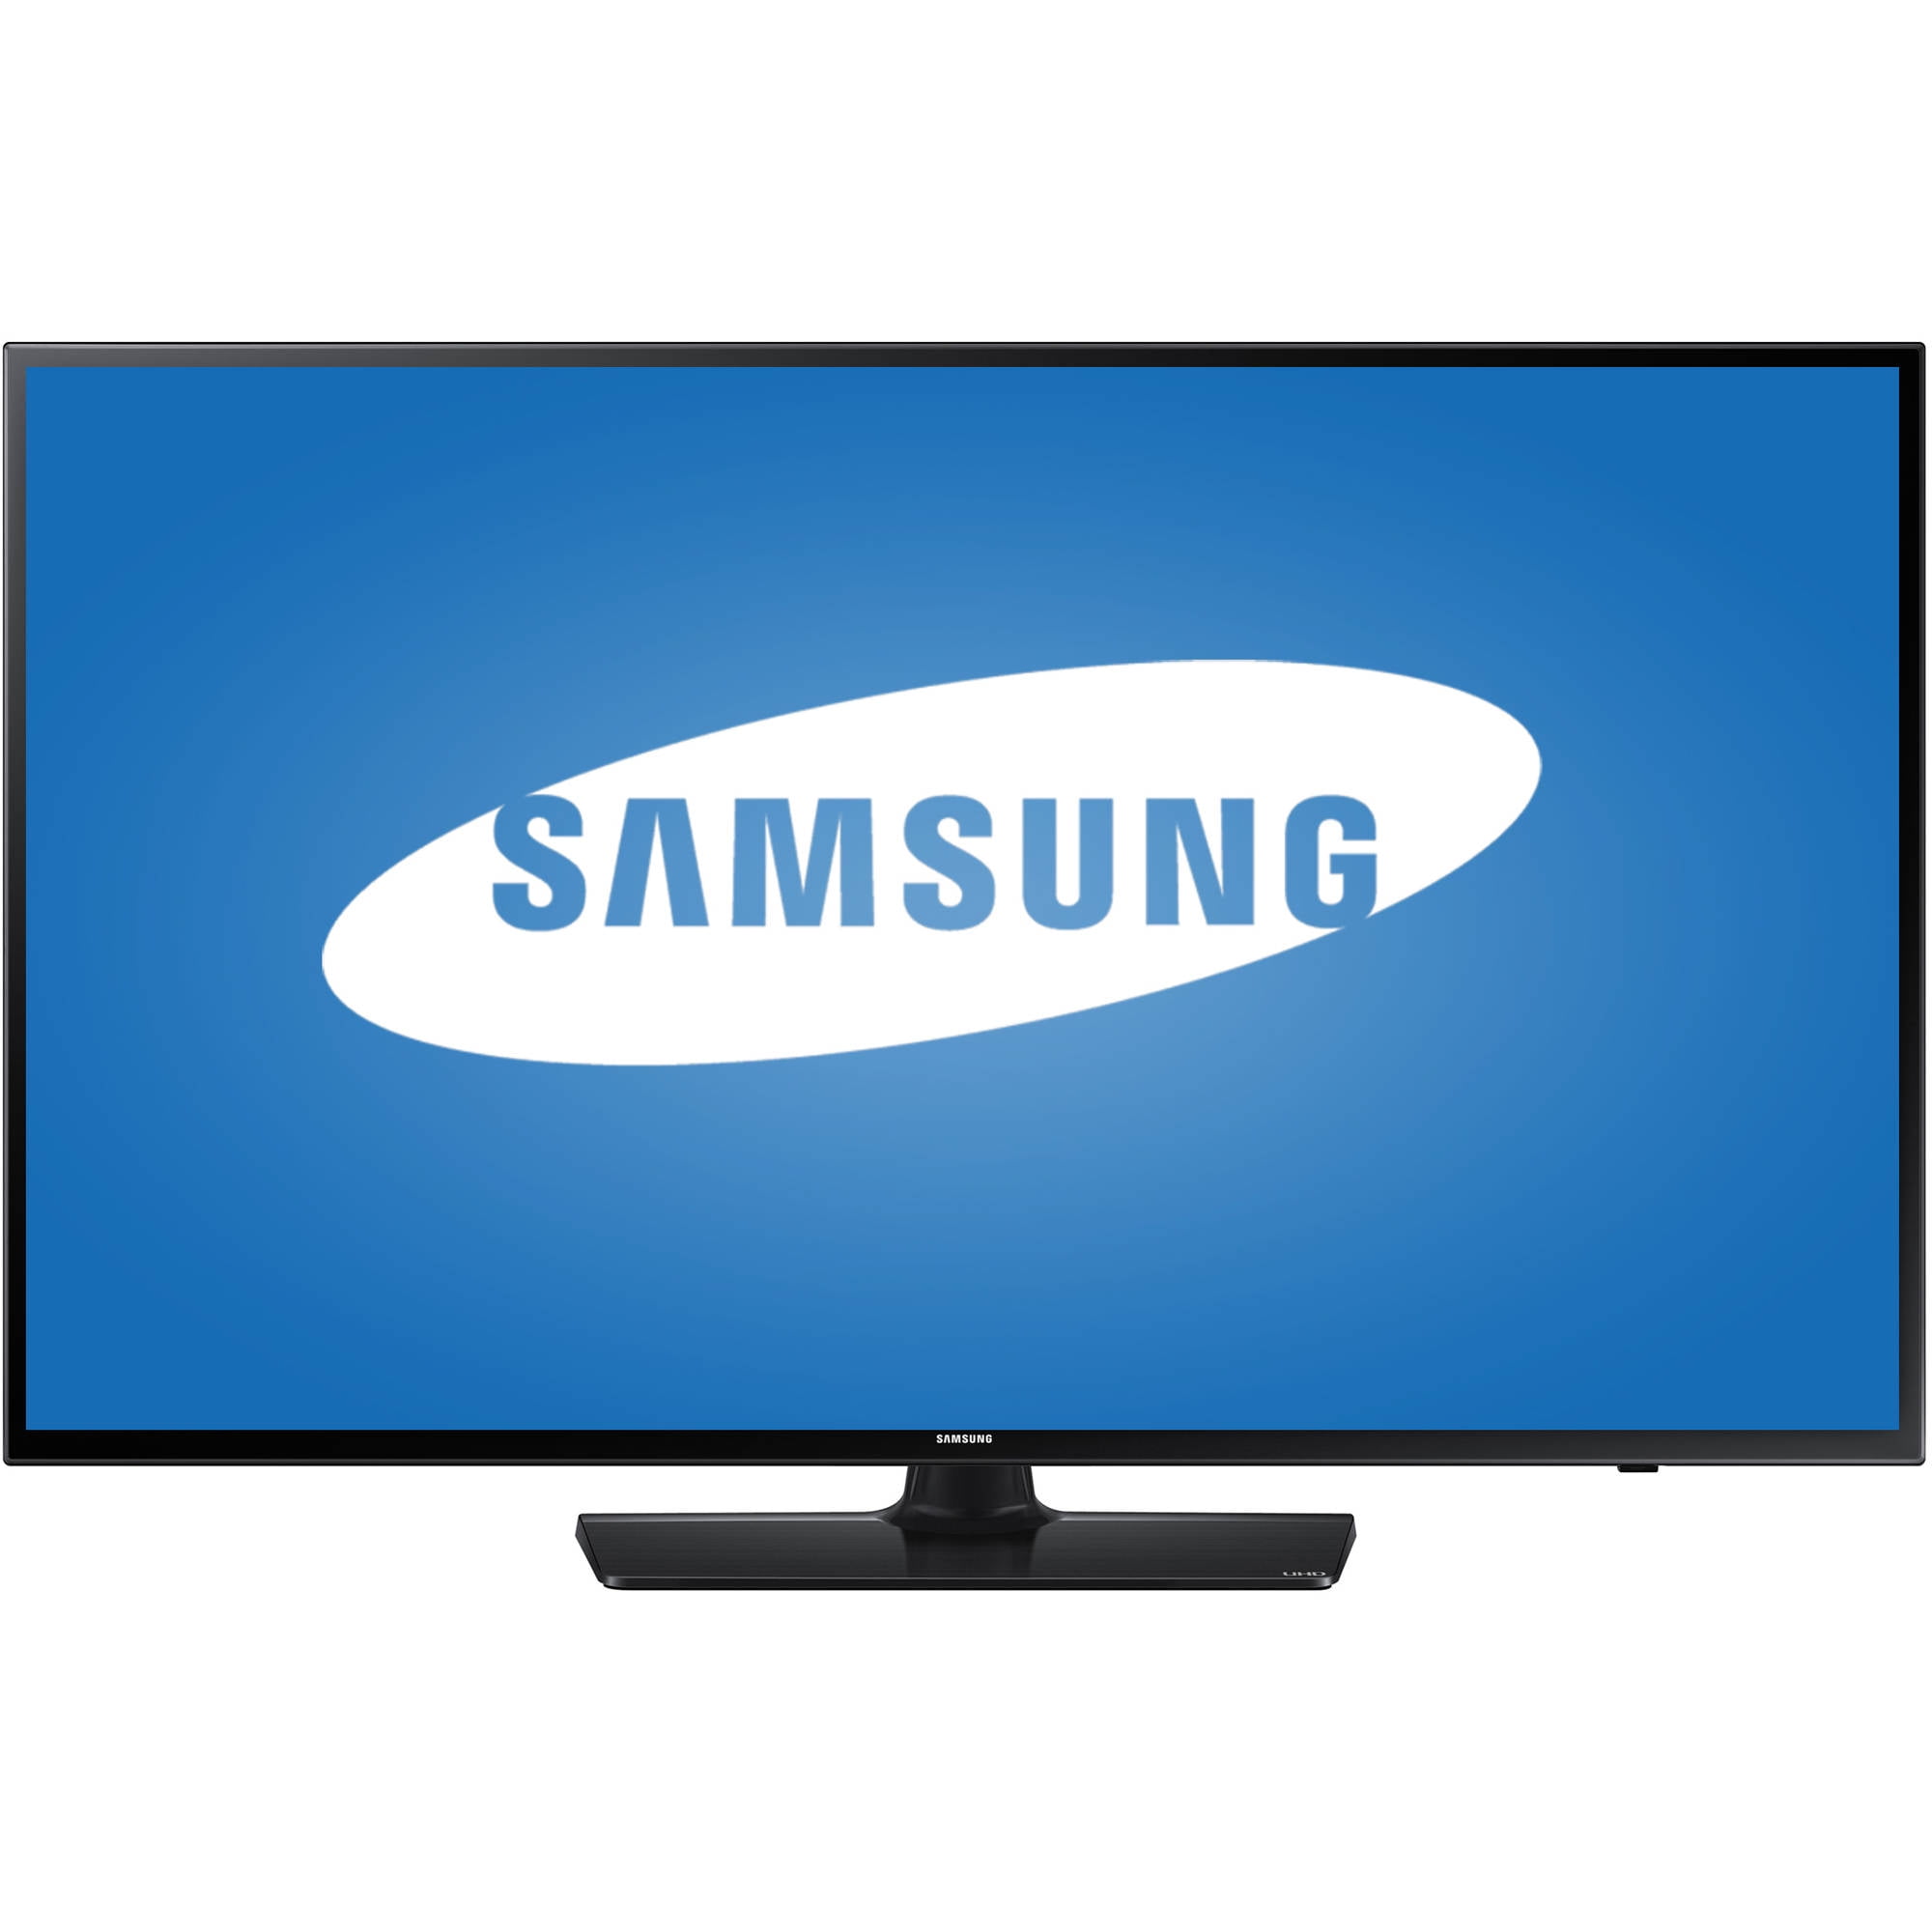 Samsung 55 Class 4k 2160p Ultra Hd Smart Led Tv Un55ju6400f Walmart Com Walmart Com